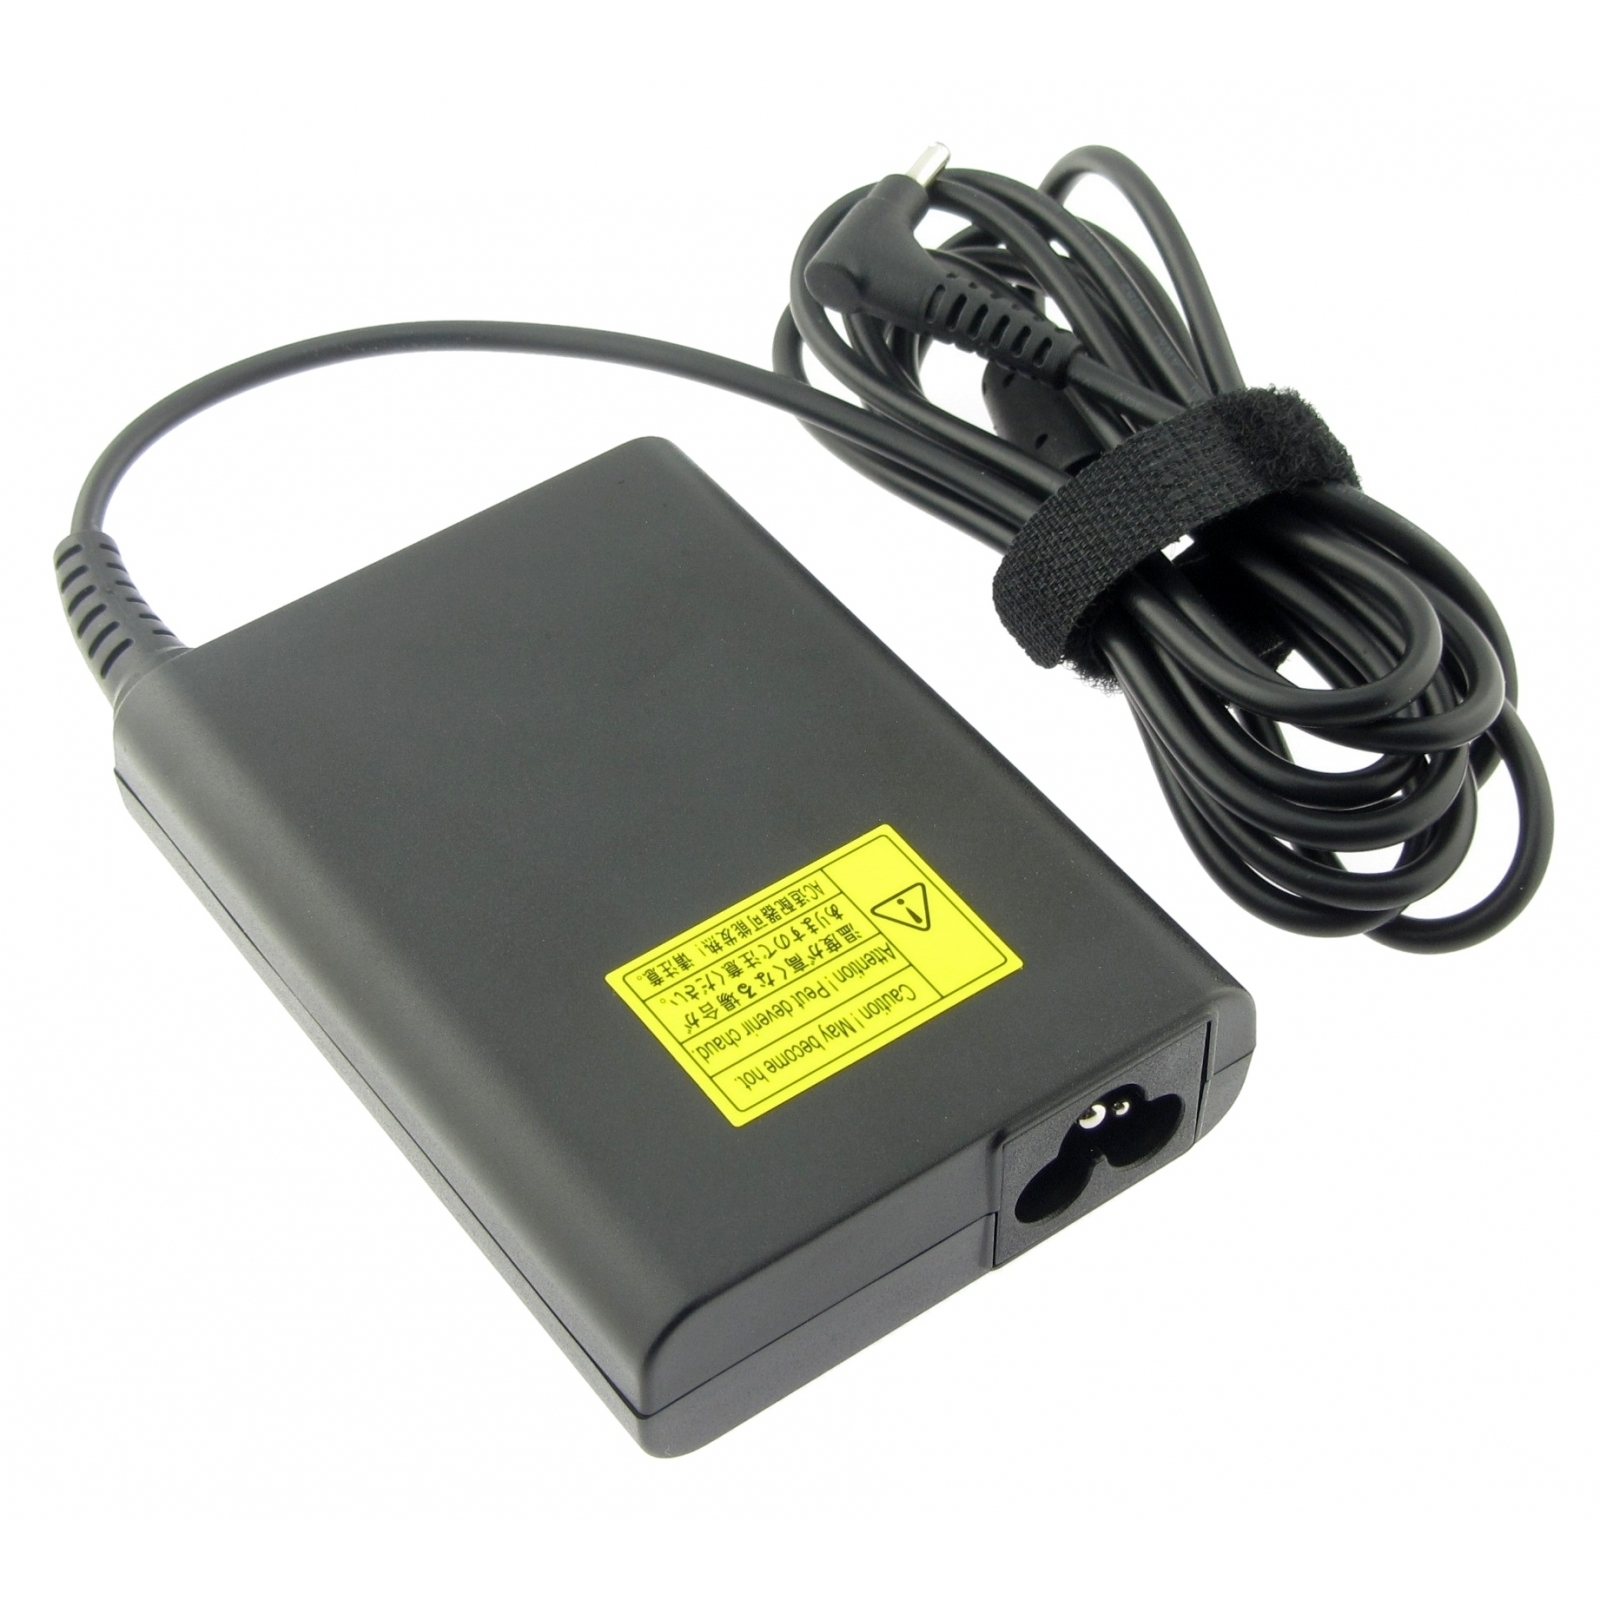 ACER original Watt 65 19V, rund Notebook-Netzteil Netzteil ACER x für mm Stecker PA-1650-80AW, 1.1 3.0 3.42A